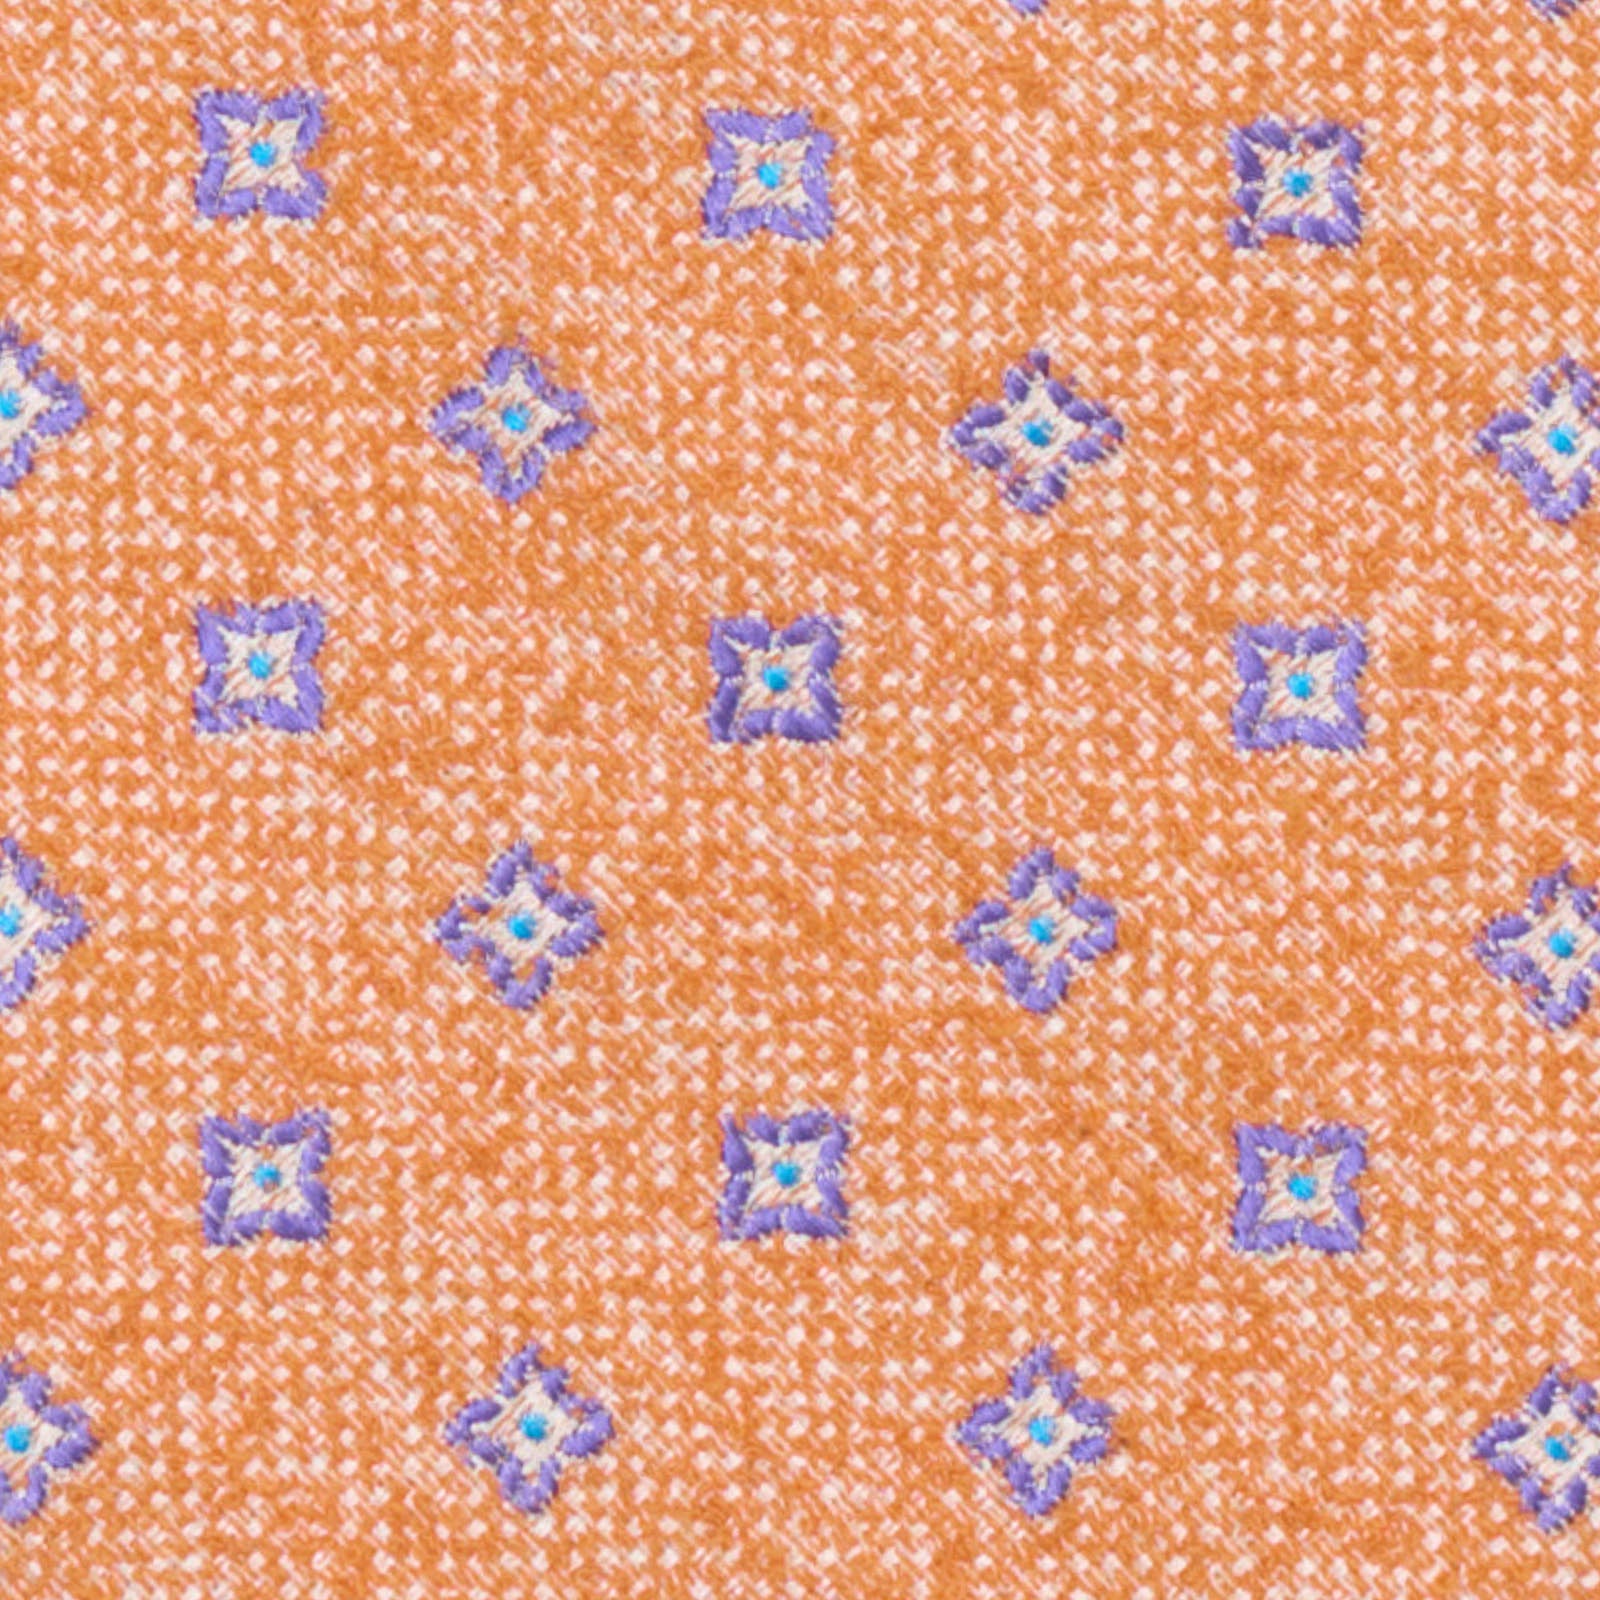 KITON Orange-Purple Medallion Seven Fold Cotton-Silk-Nylon Tie NEW